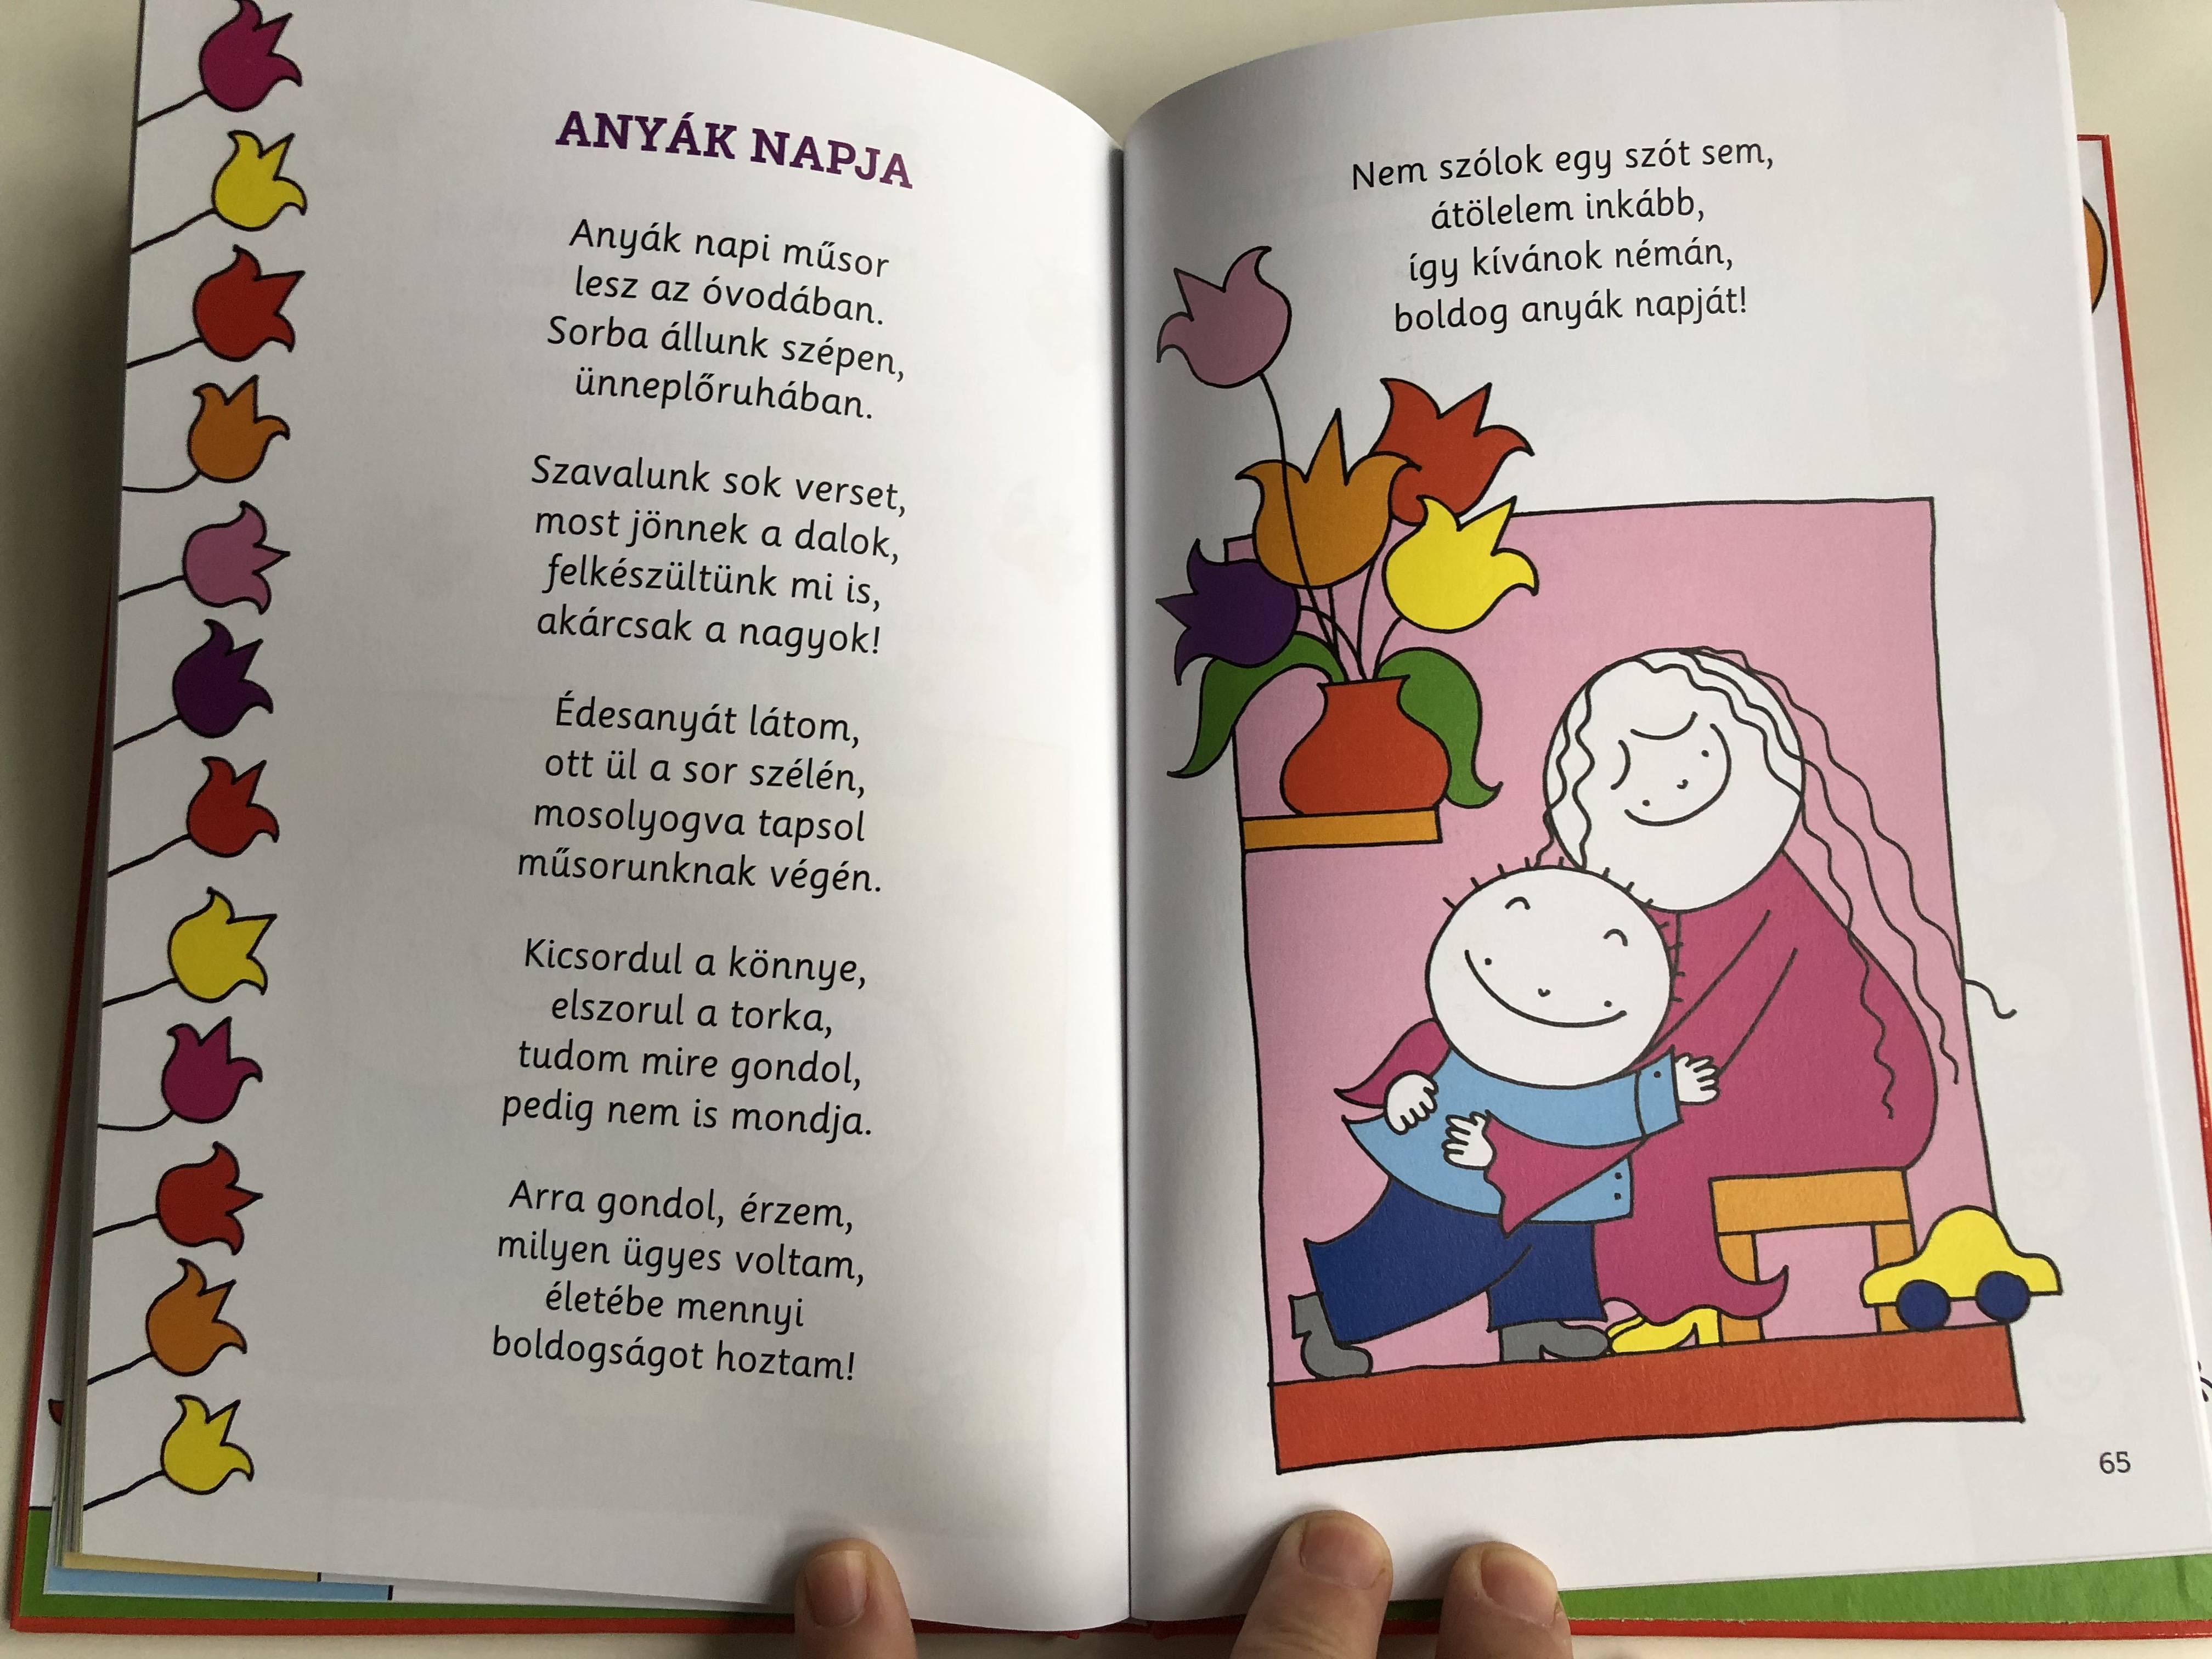 Zsákbamacska -- Versek óvodásoknak by Bartos Erika / HUNGARIAN COLORFUL  Nursery RHYME BOOK FOR CHILDREN / Hardcover / Móra könyvkiadó -  bibleinmylanguage